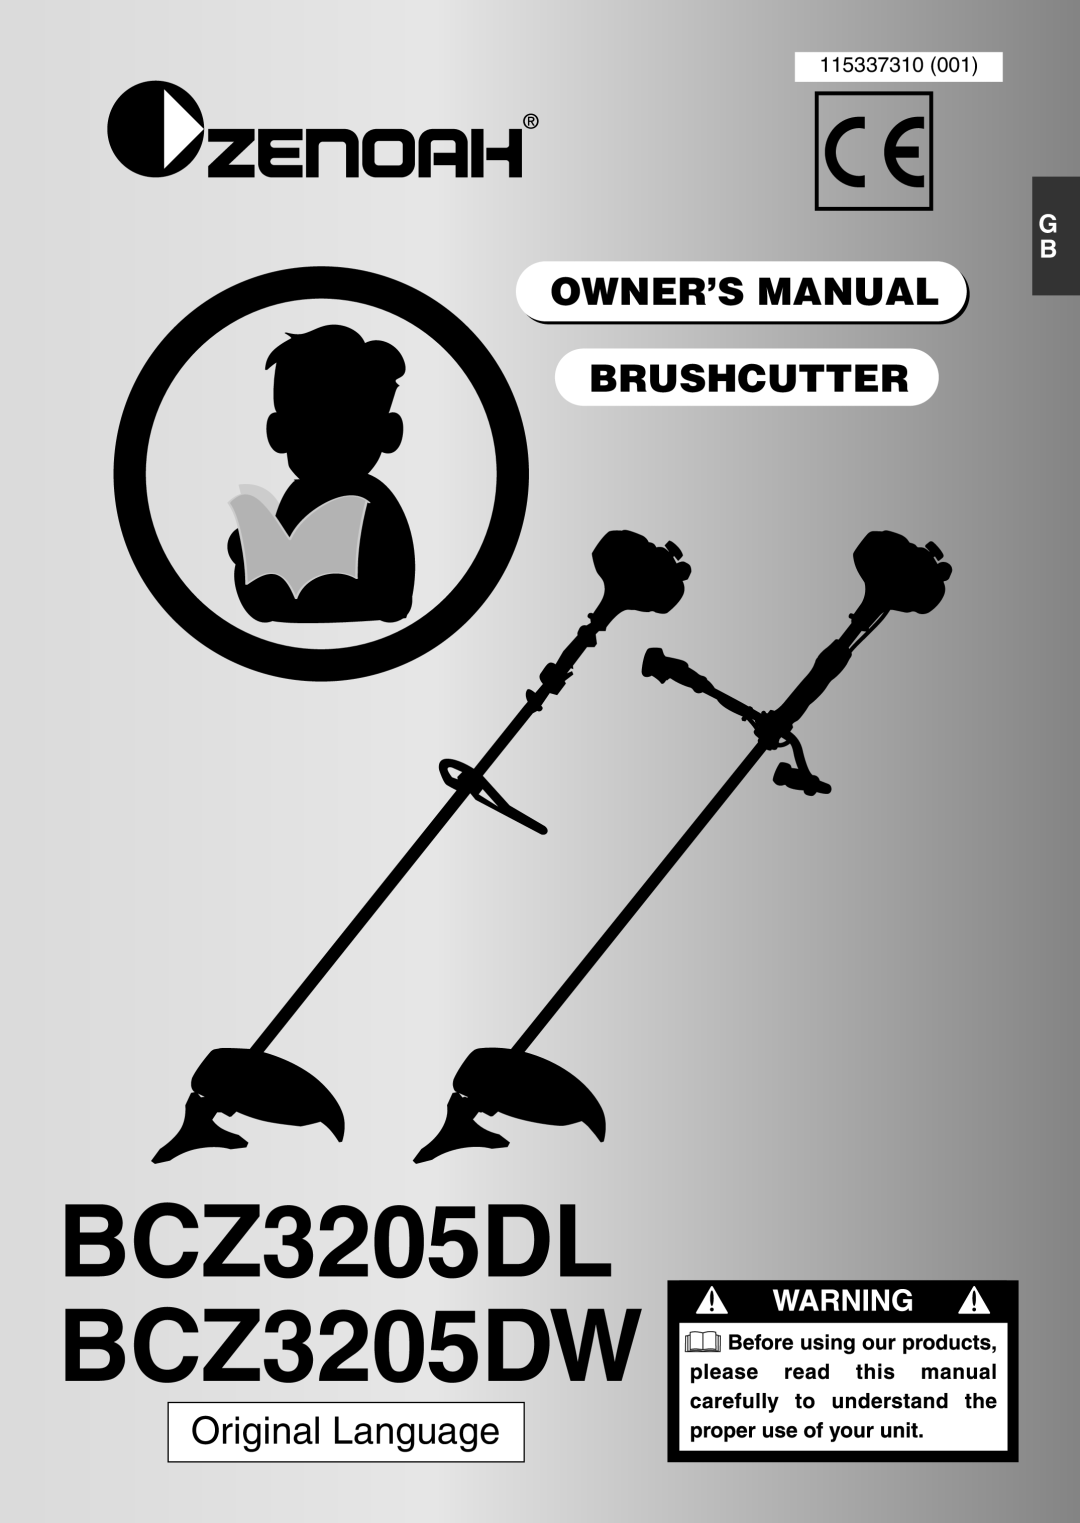 Husqvarna owner manual BCZ3205DL BCZ3205DW, Original Language, 115337310 